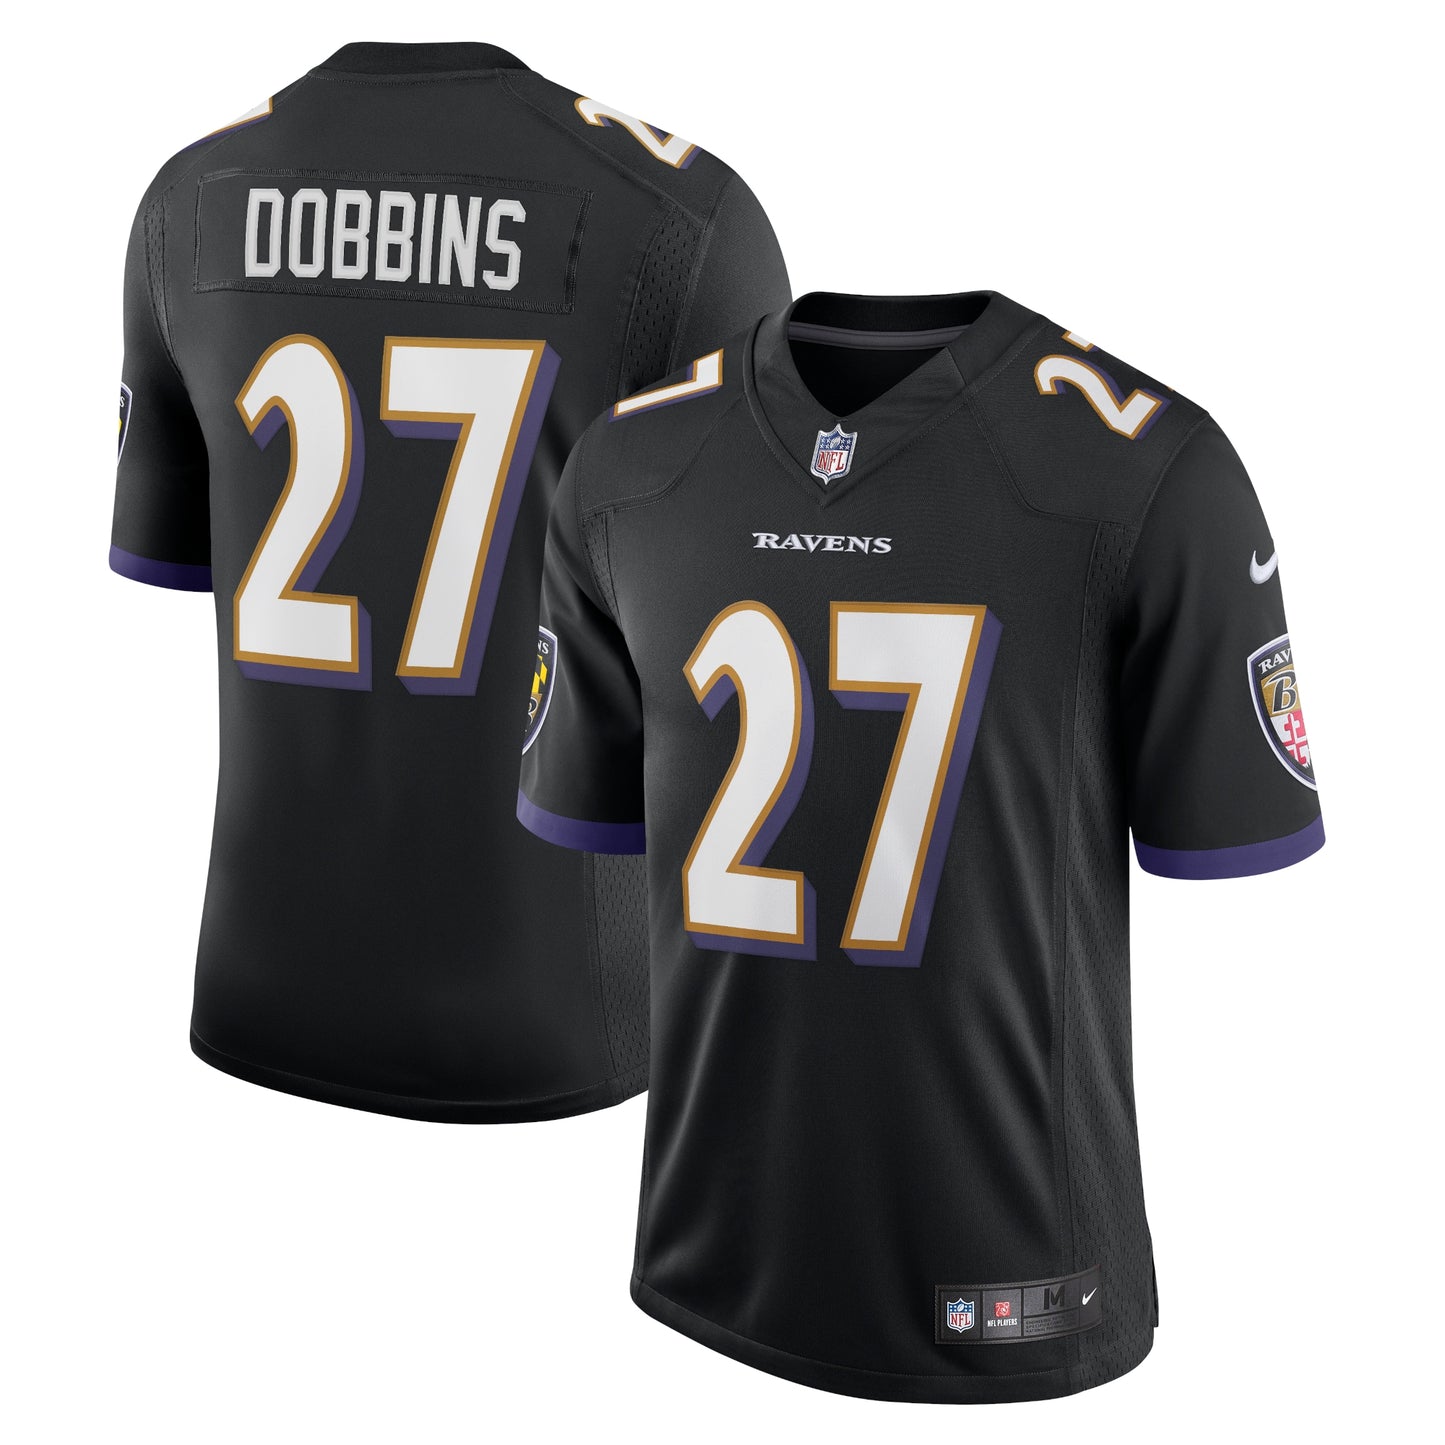 J.K. Dobbins Baltimore Ravens Nike Vapor Limited Jersey - Black